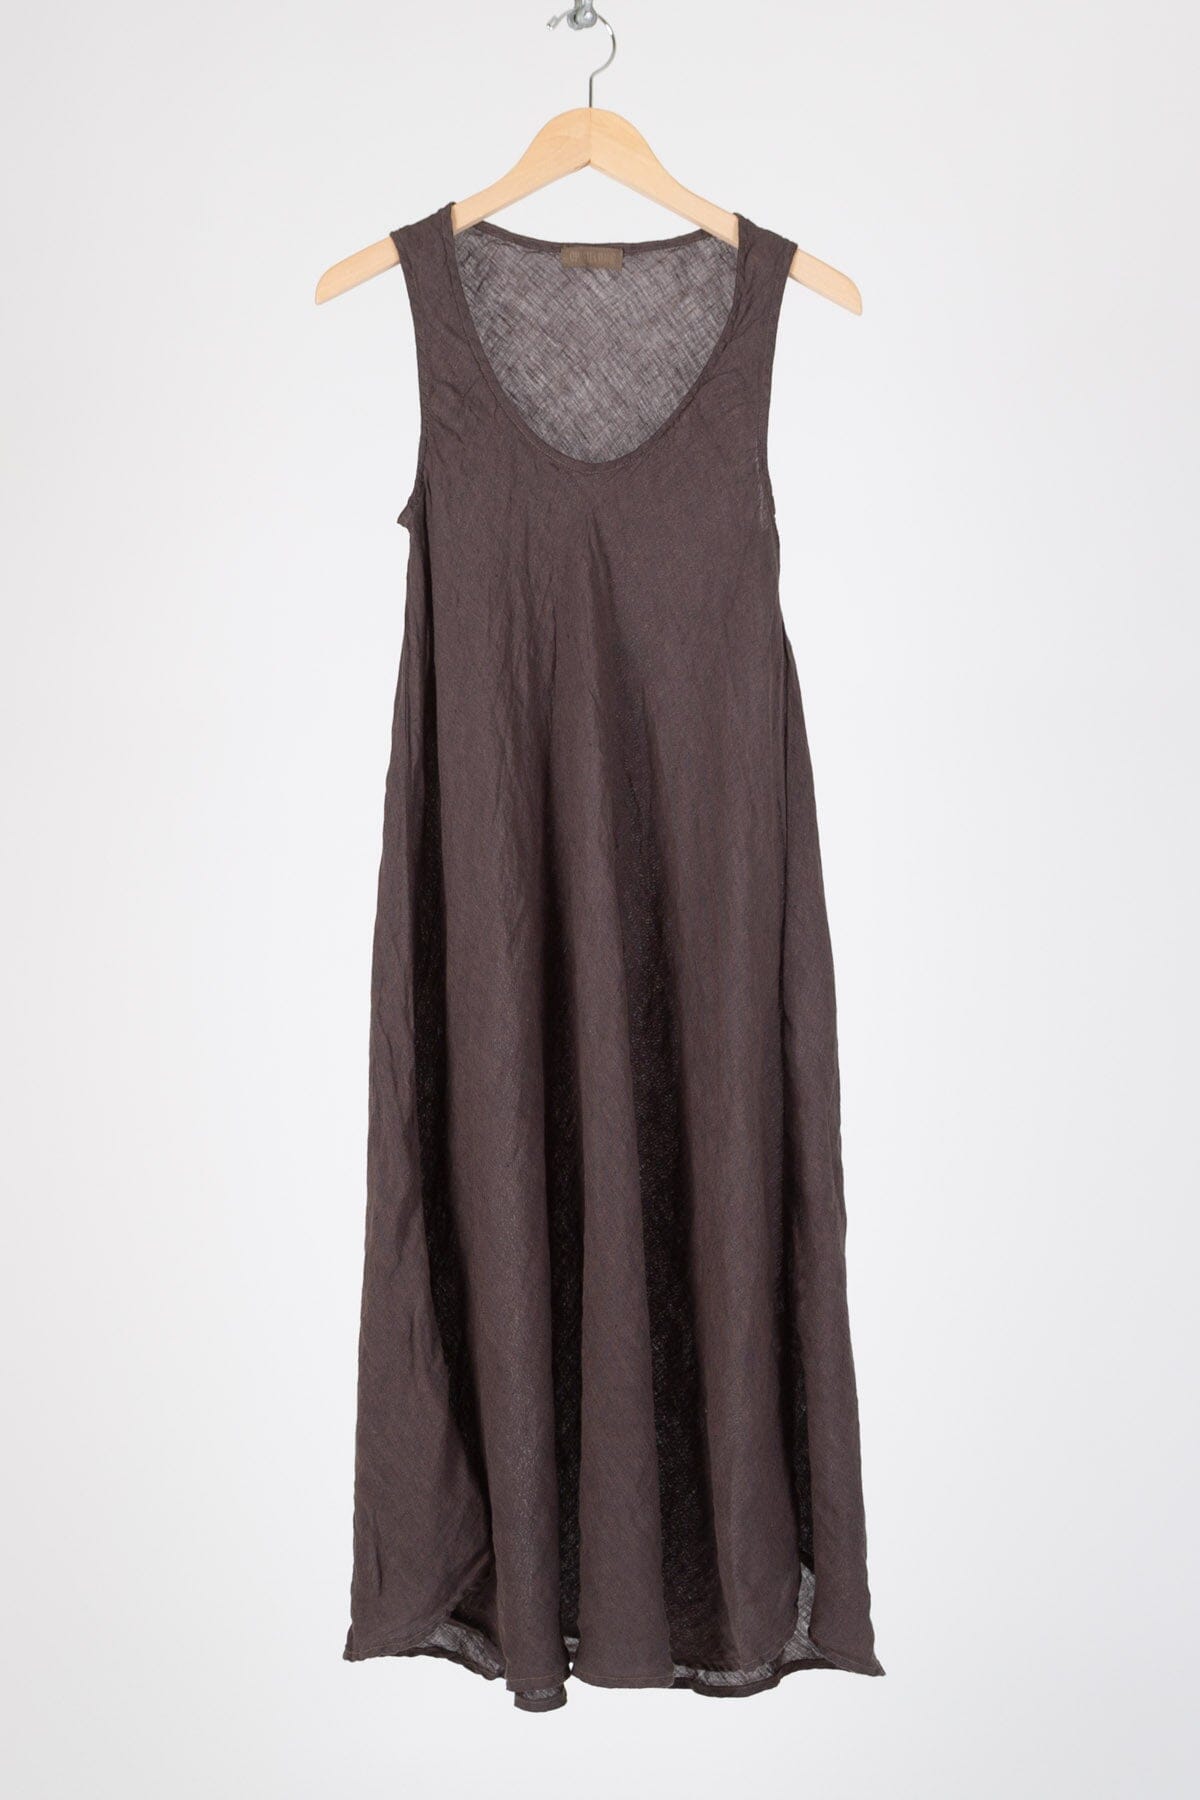 Bree - Iridescent Linen S15 - Iridescent Skirts/Dresses CP Shades mink 162